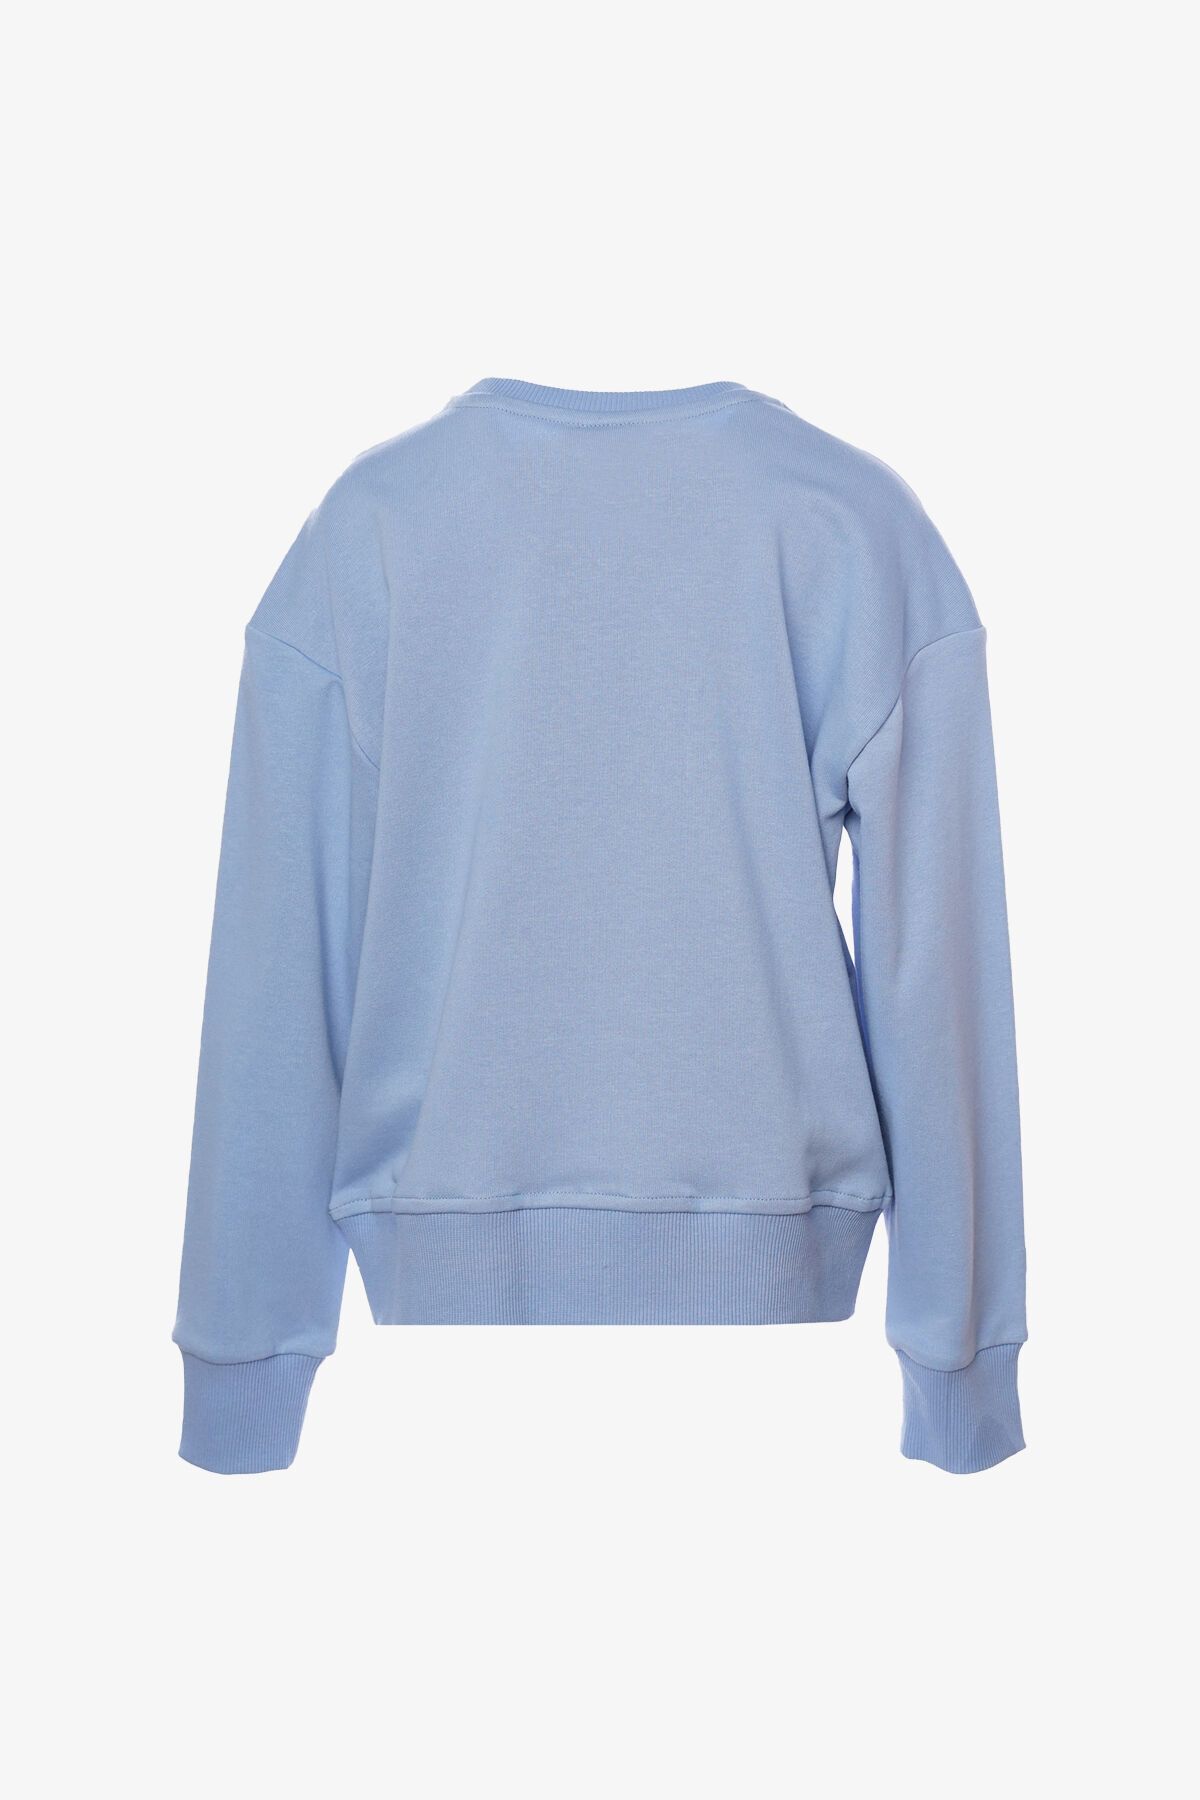 hummel Hmlcolby Child Blue sweatshirt